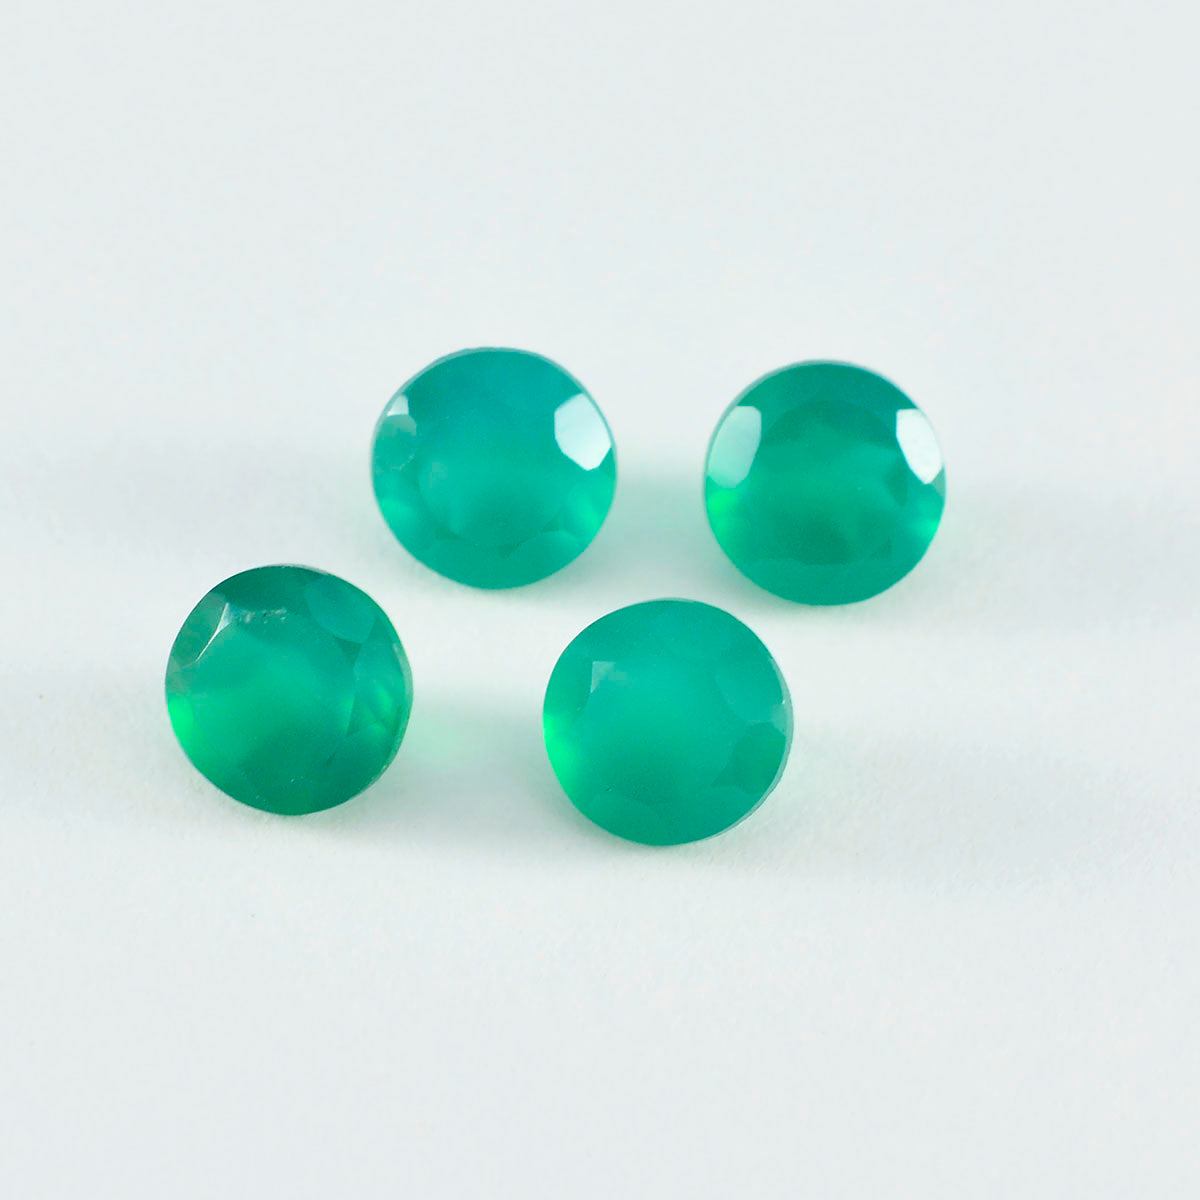 Riyogems 1PC Real Green Onyx Faceted 6x6 mm Round Shape Good Quality Gems